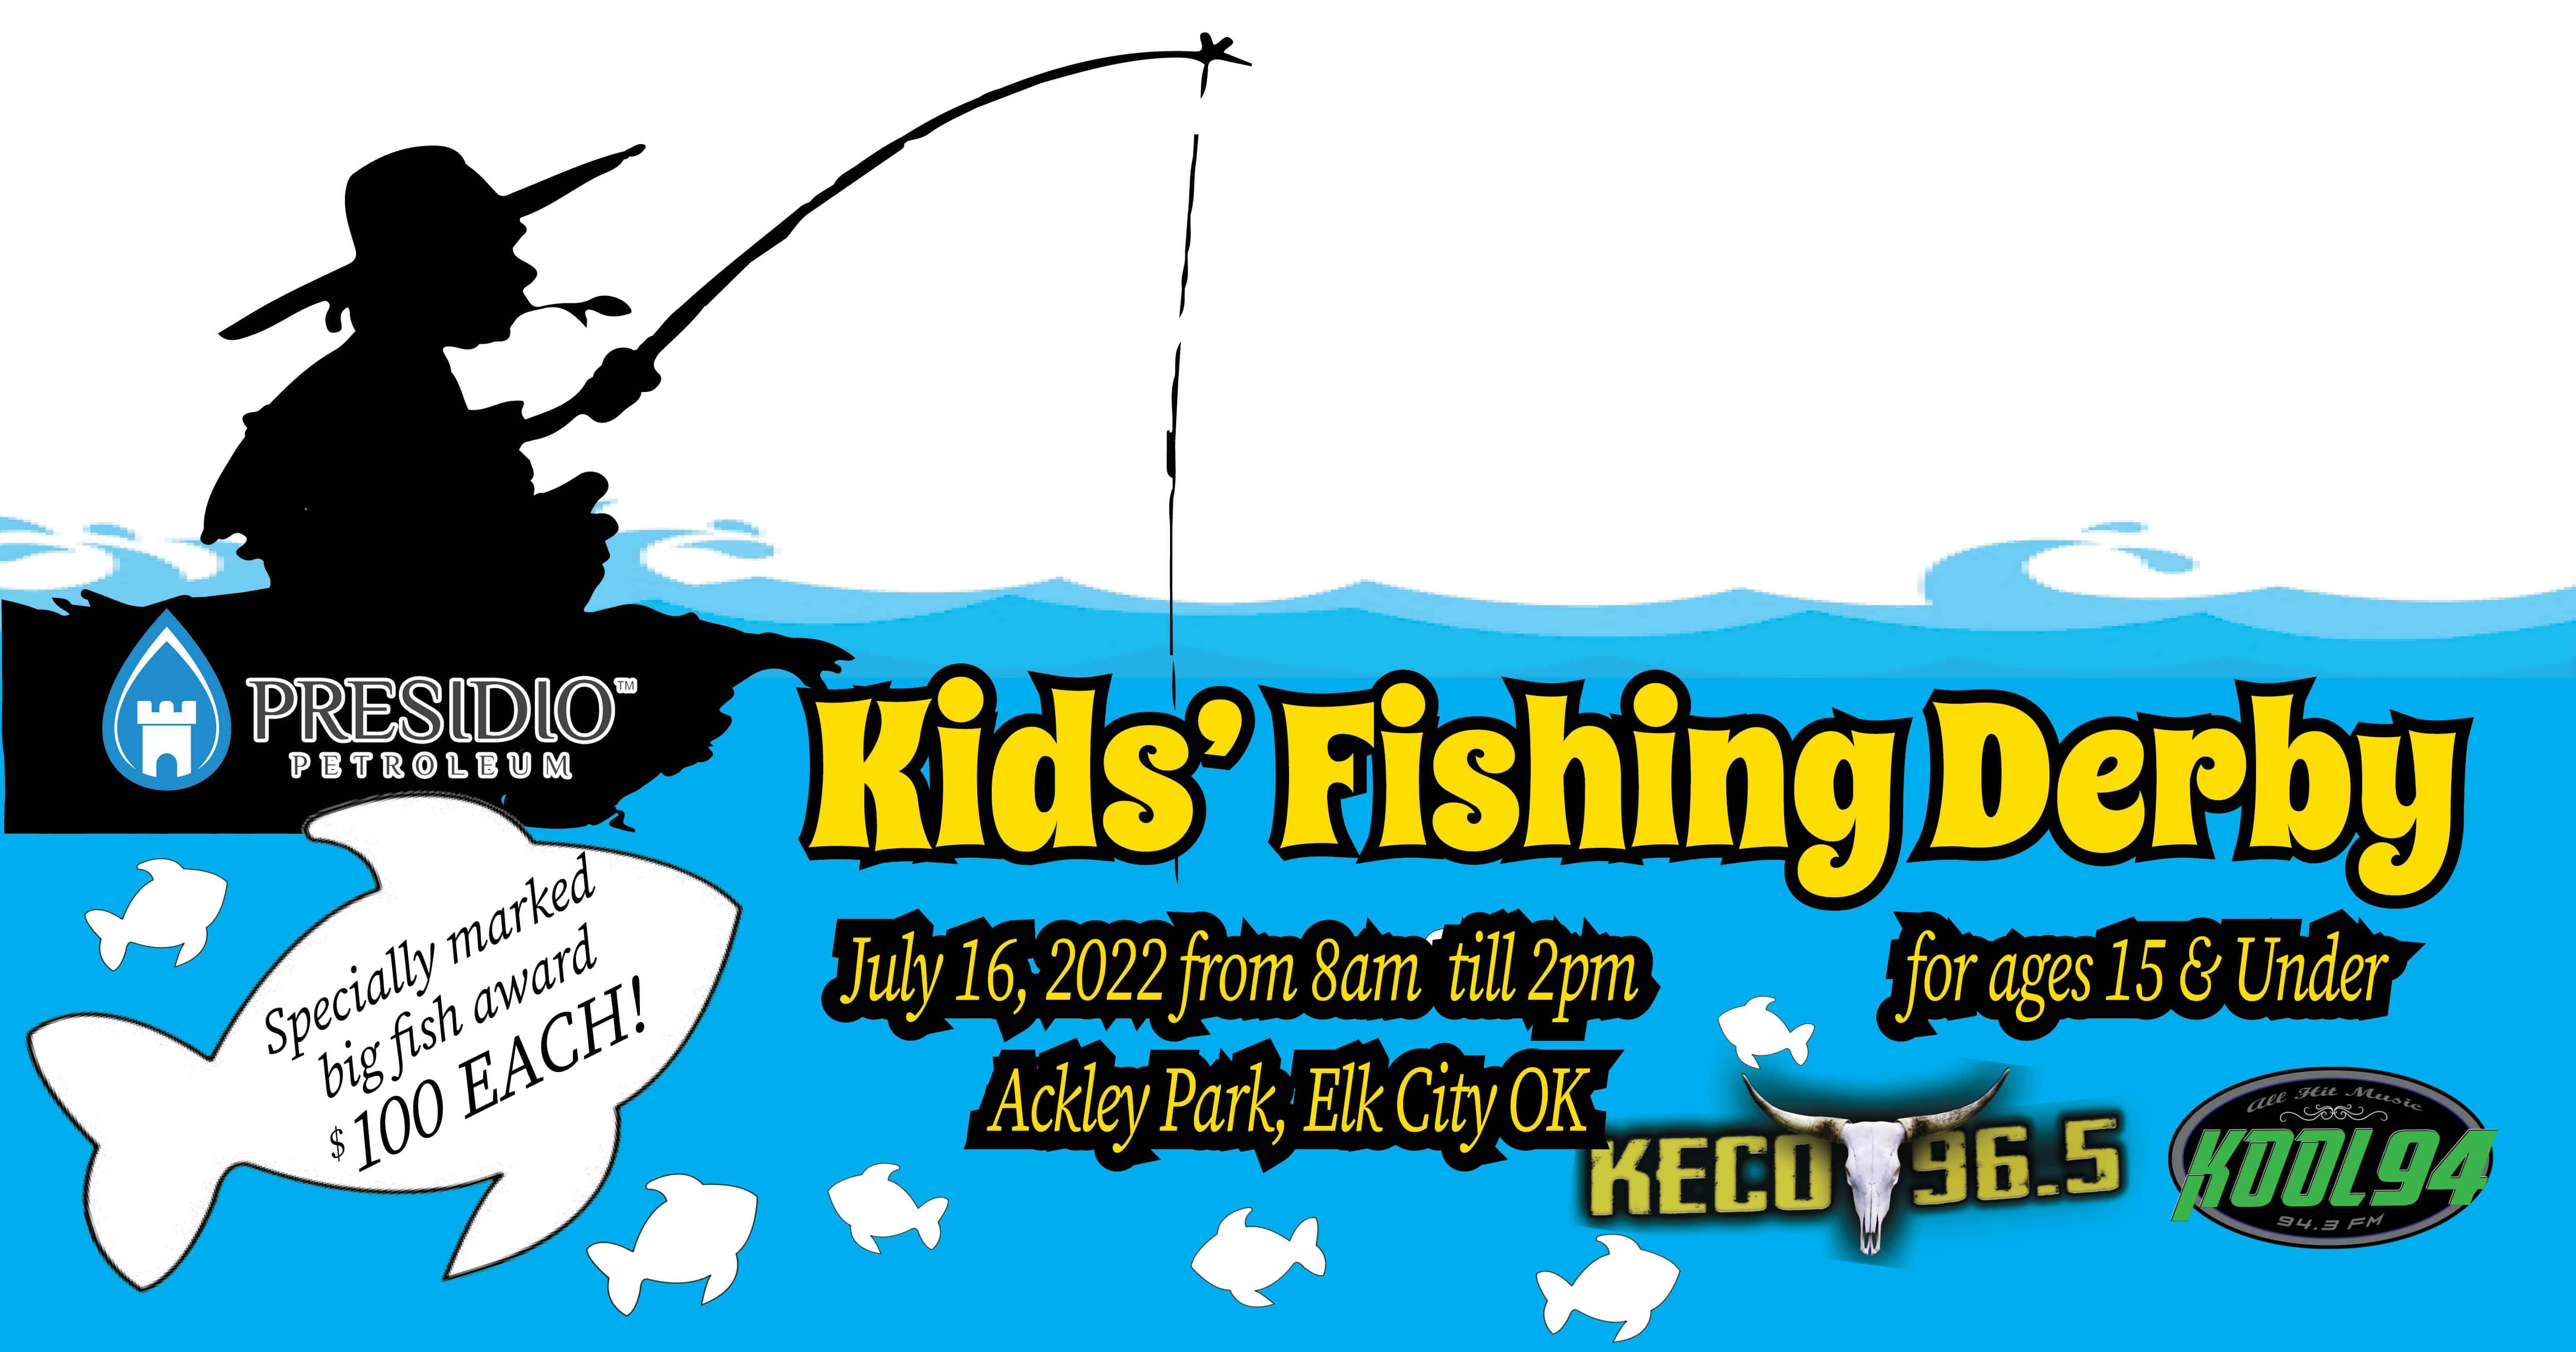 Kids' Fishing Derby placard